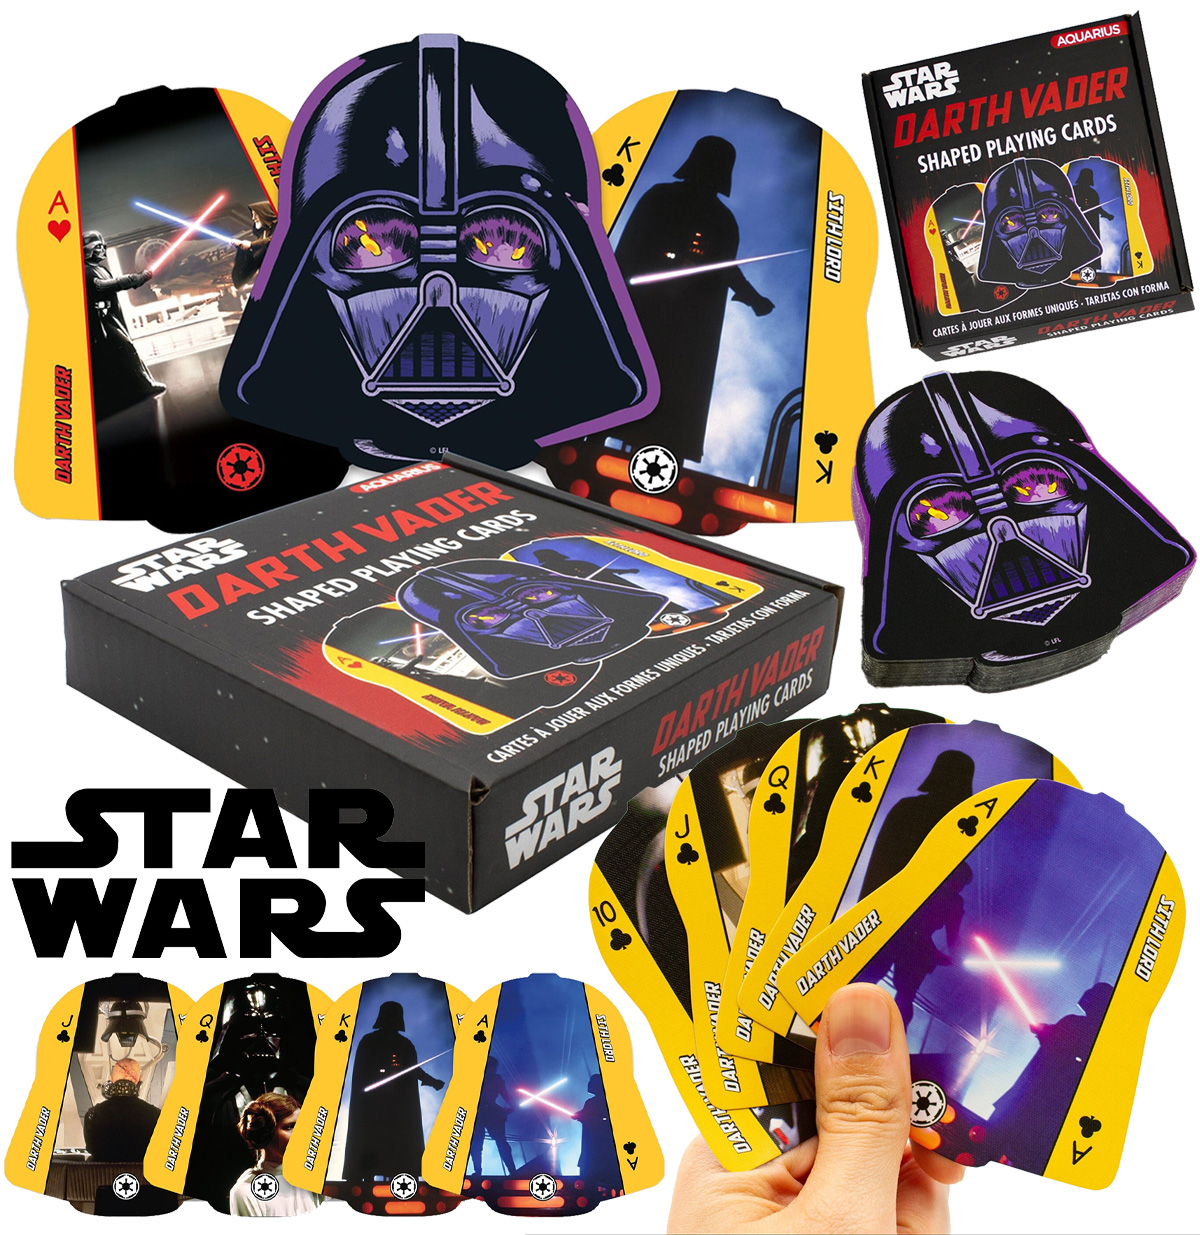 Baralho Star Wars Darth Vader com Cartas Recortadas